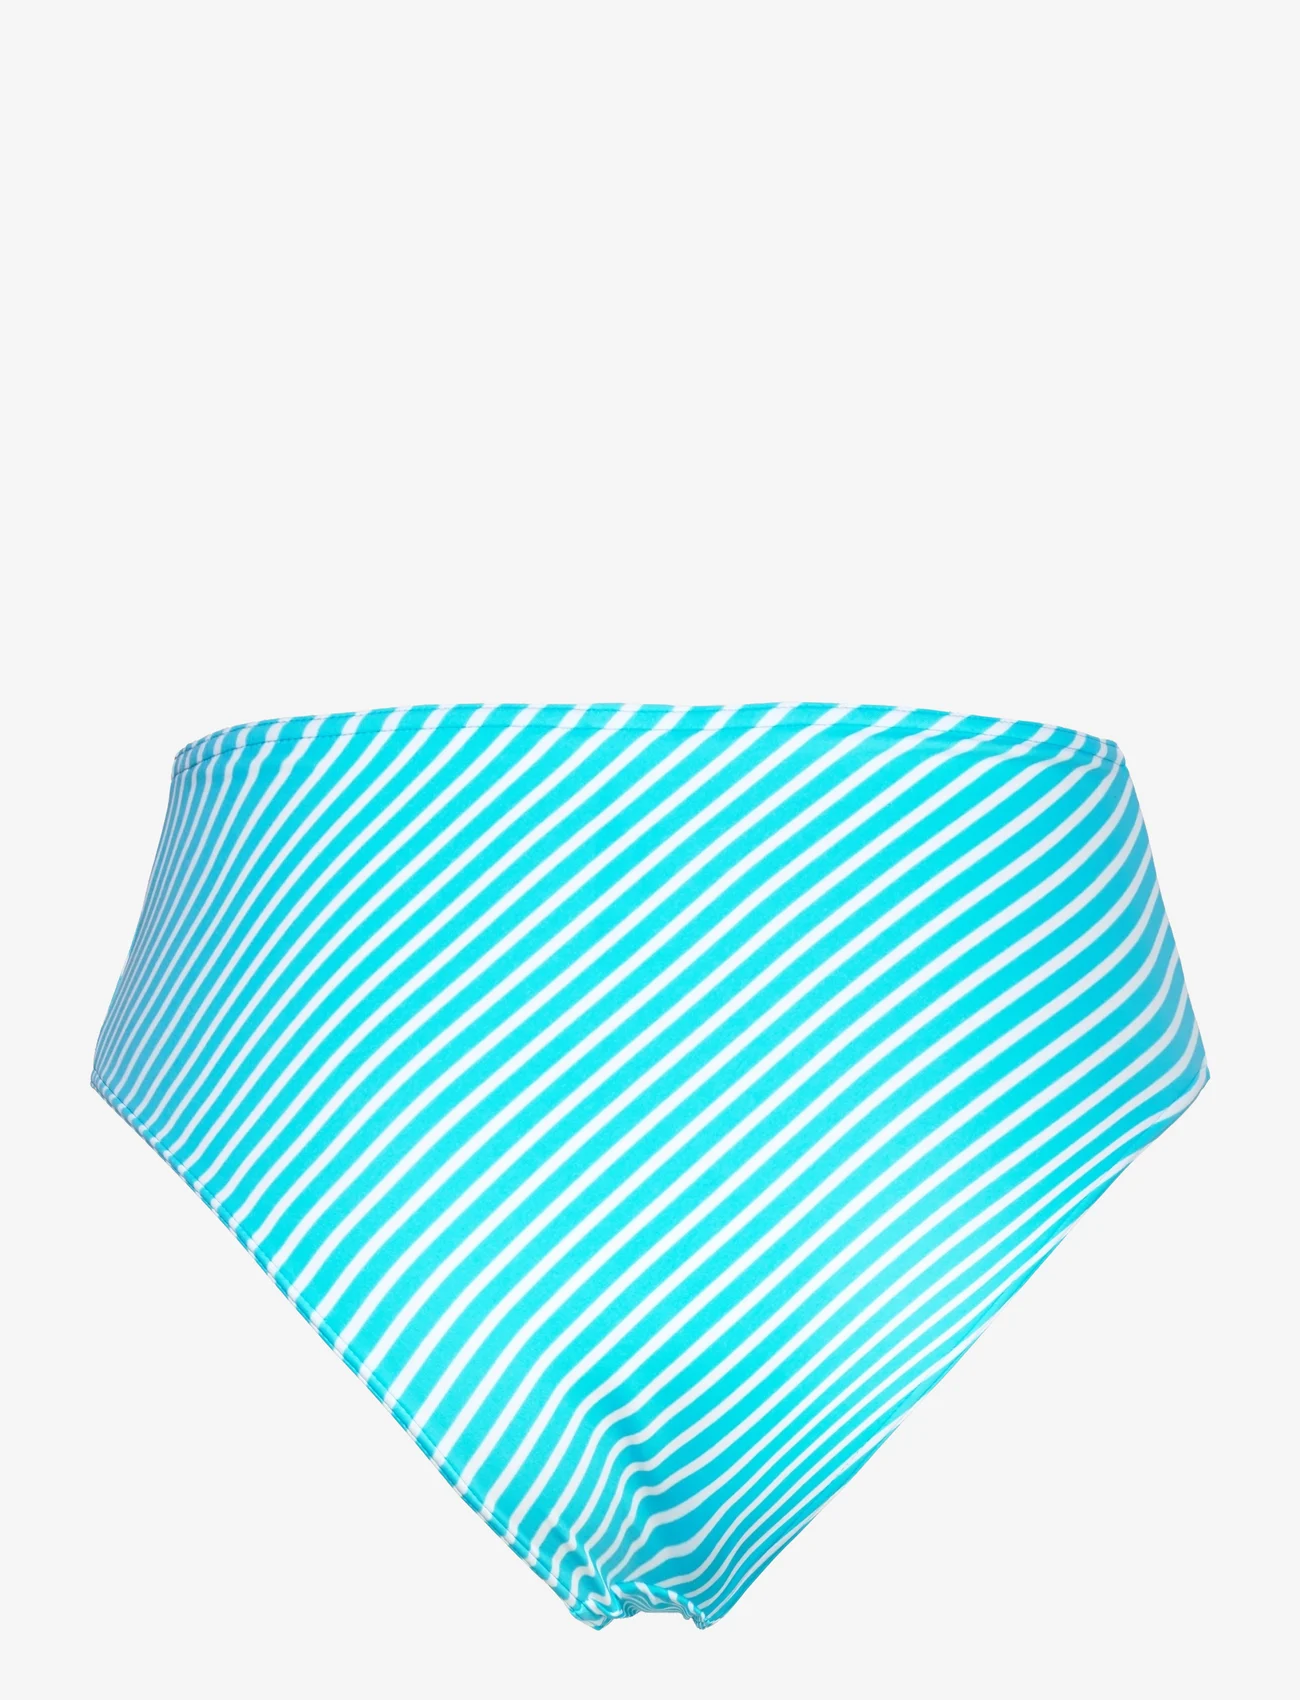 Freya - JEWEL COVE - high waist bikini bottoms - stripe turquoise - 1